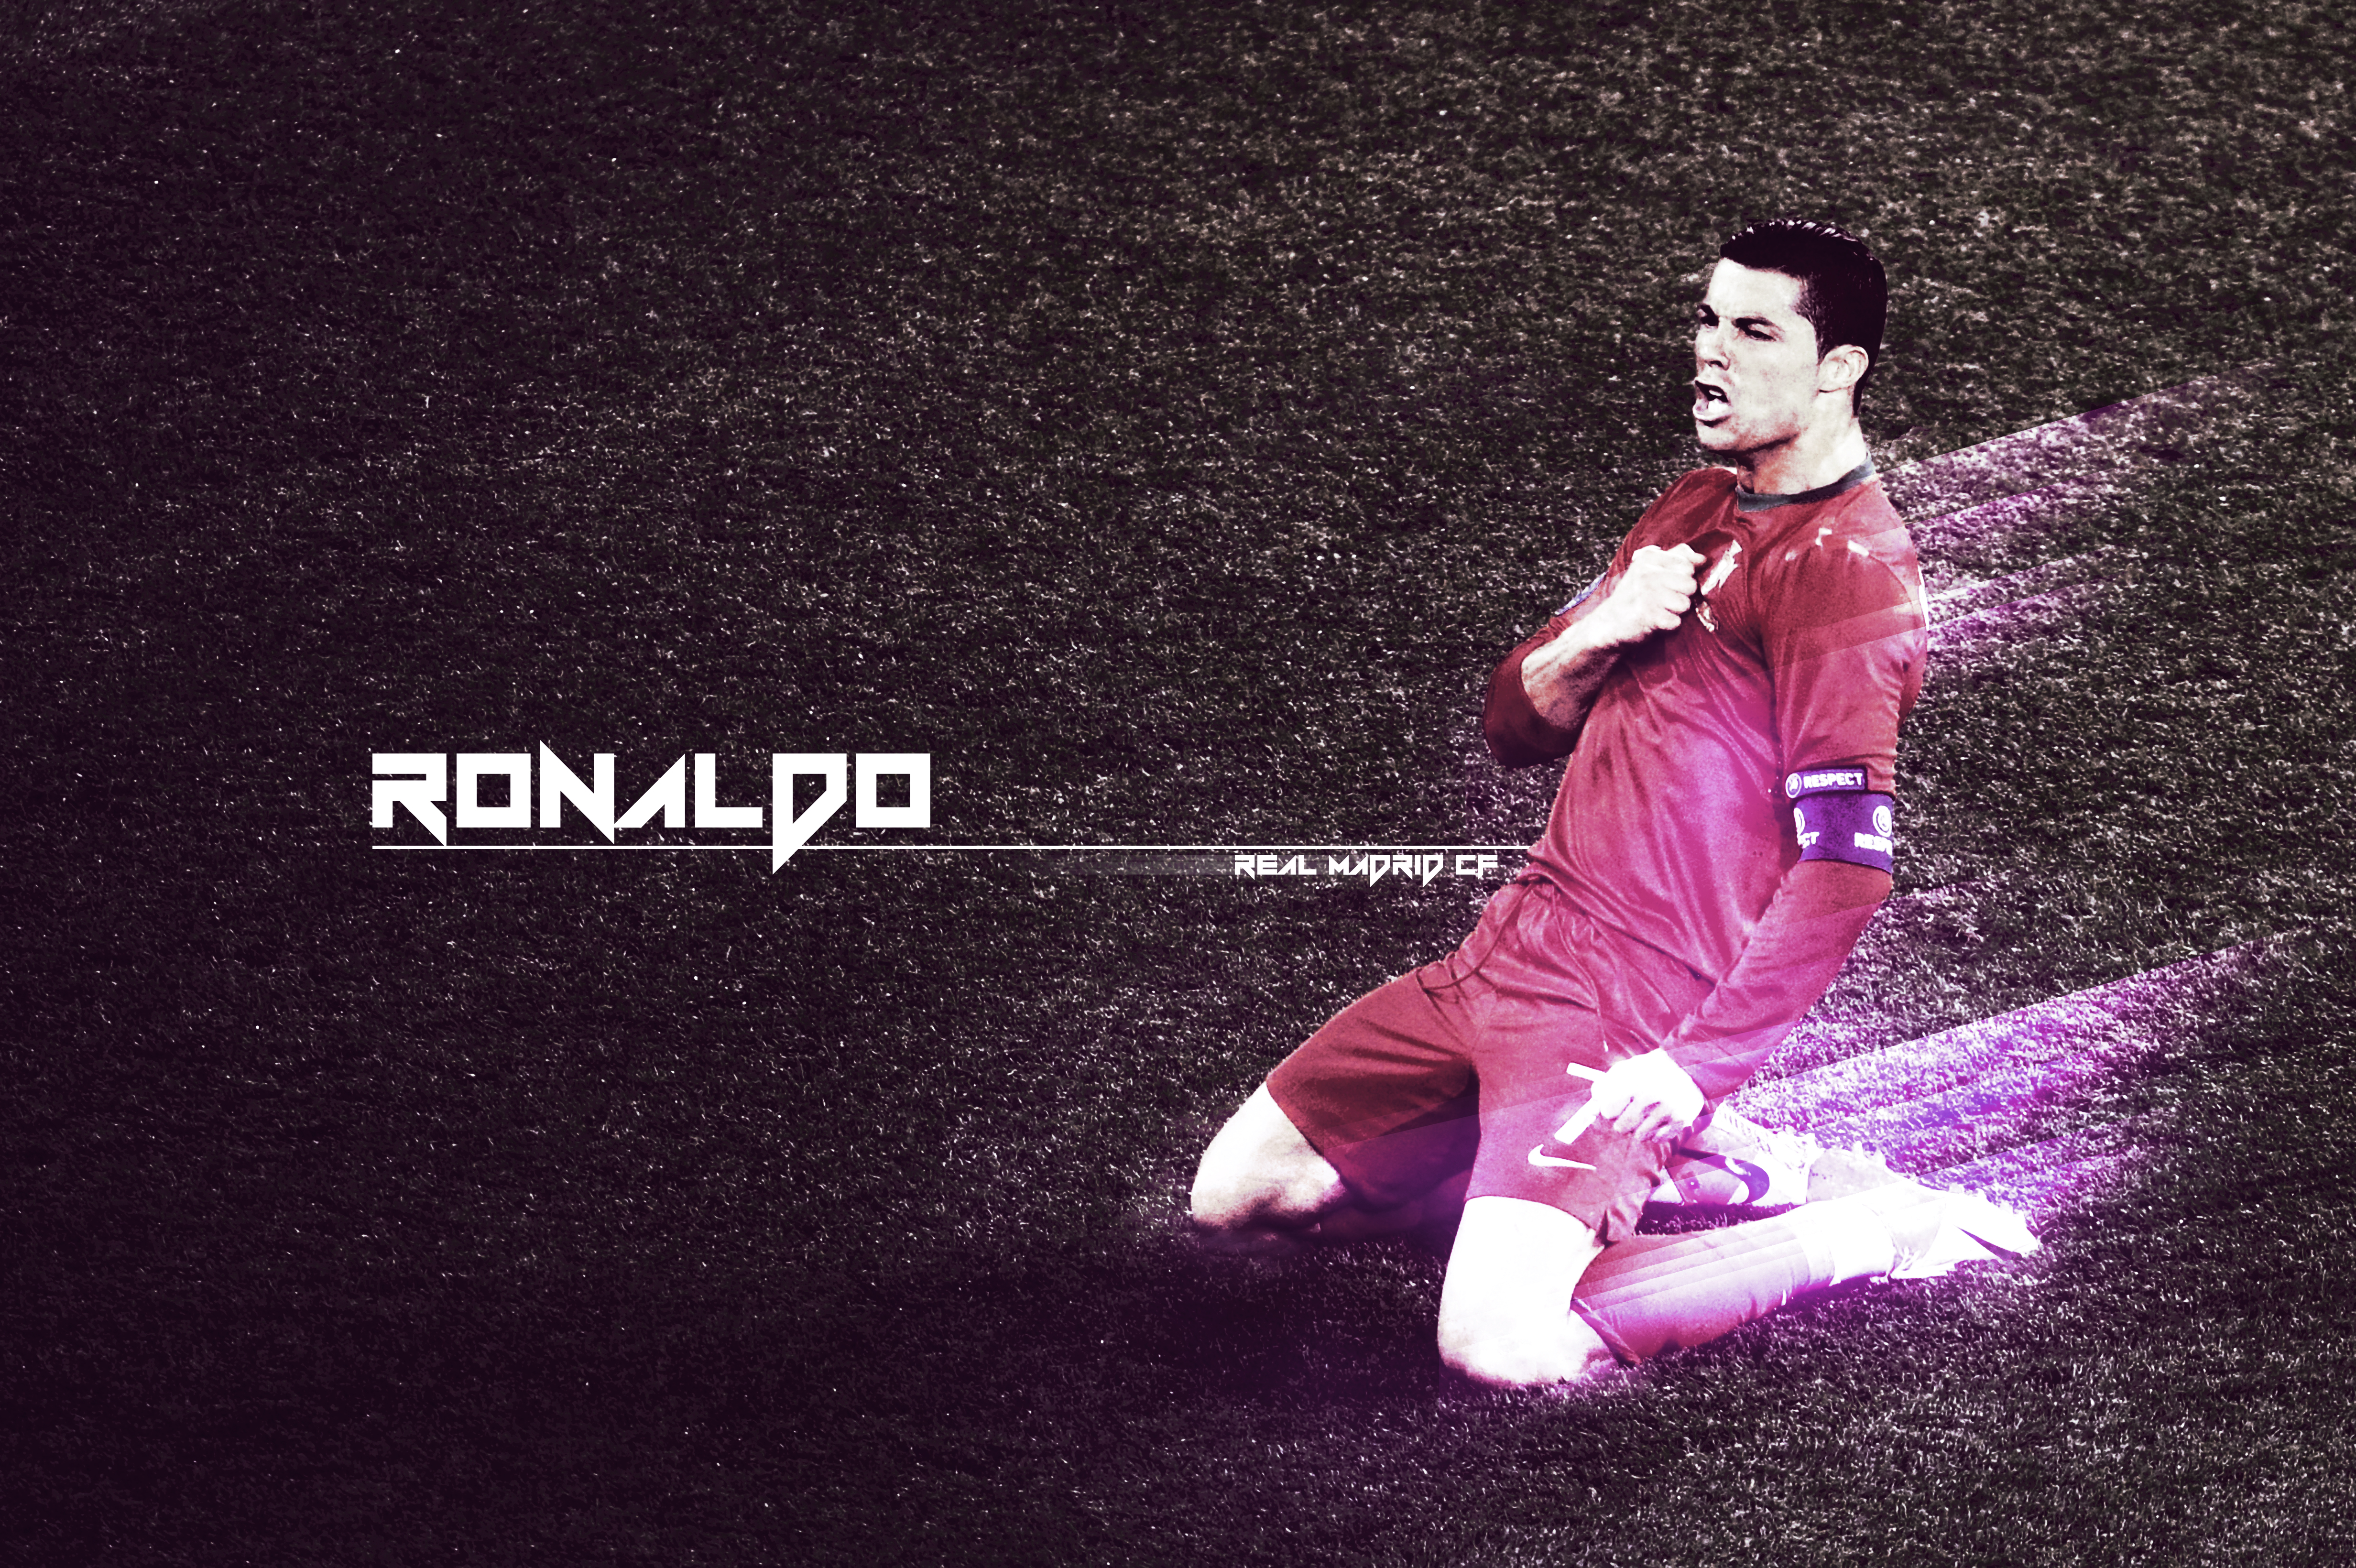 Cristiano Ronaldo celebration EURO 2012 Wallpaper by SKL7 on